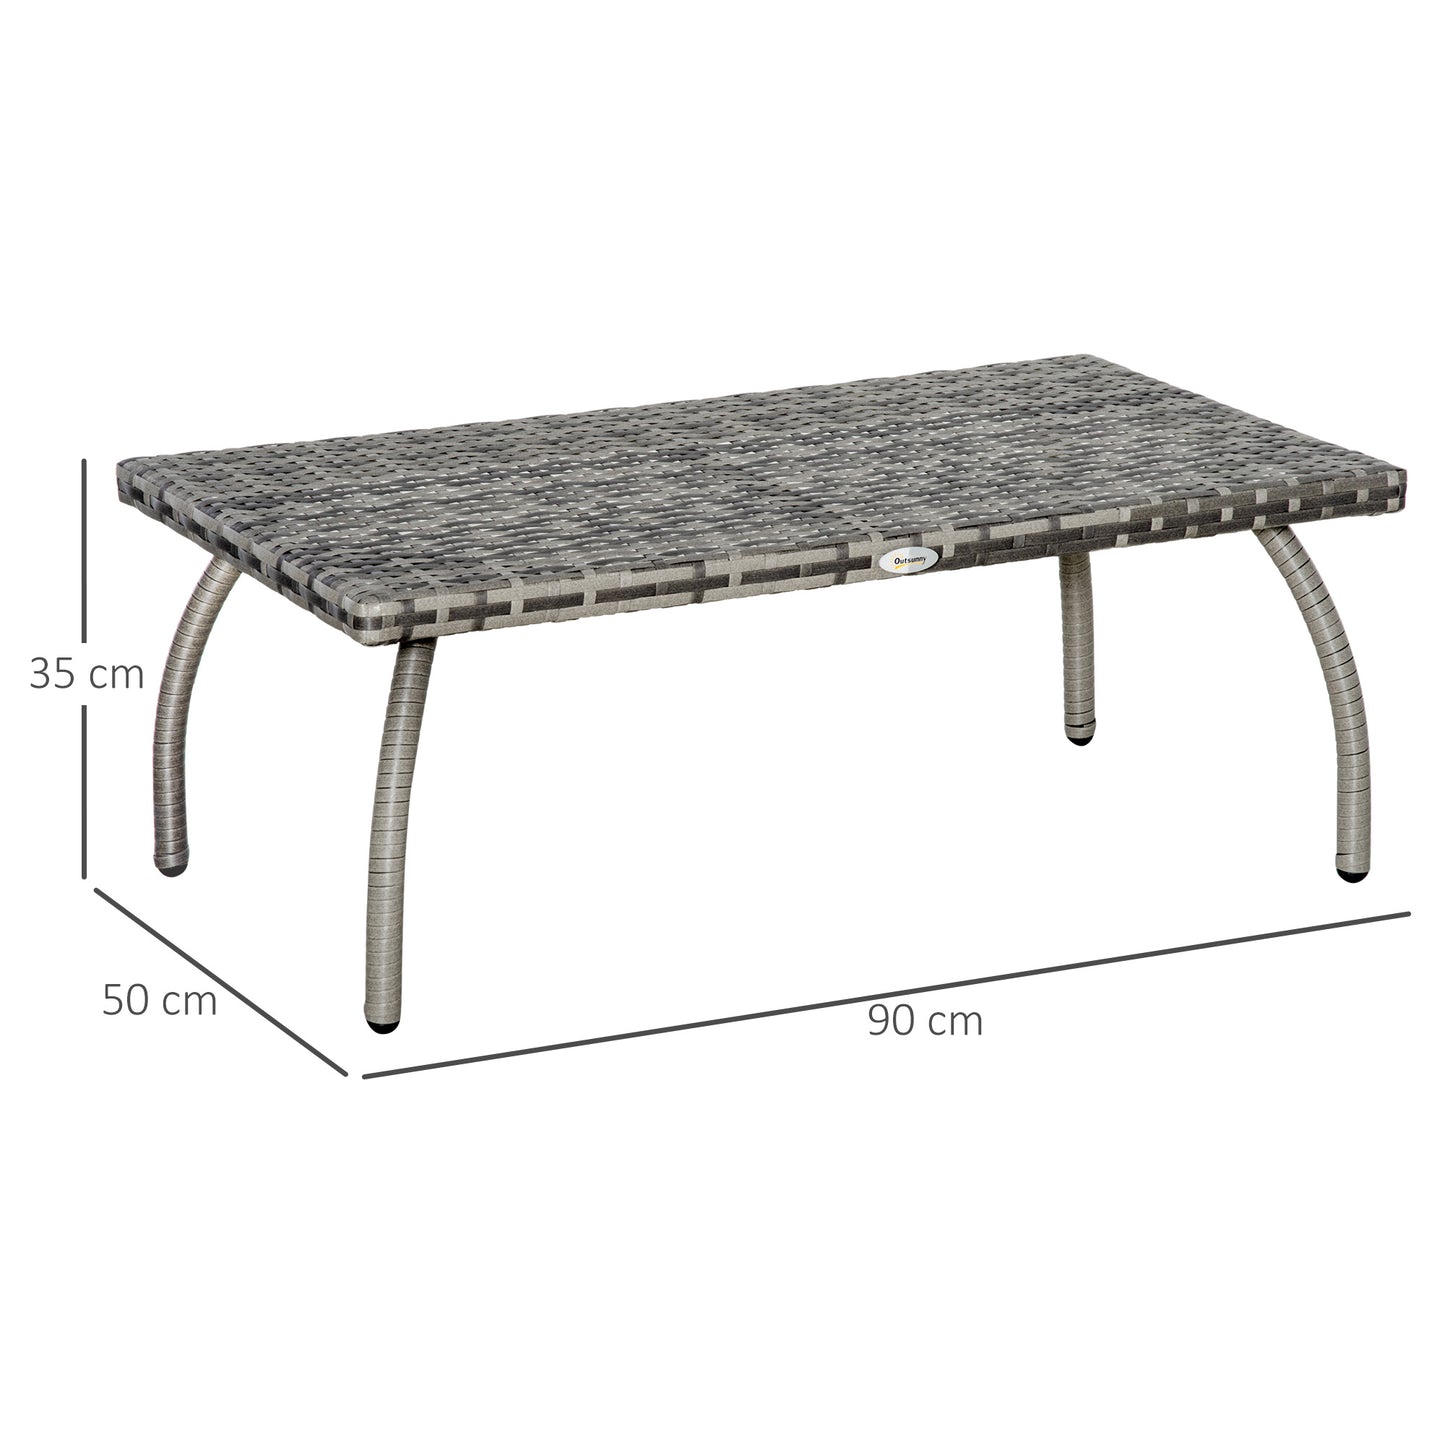 Outsunny Rattan Alfresco Table: Weather-Defying Wicker Companion for Patio, Garden & Balcony, Grey